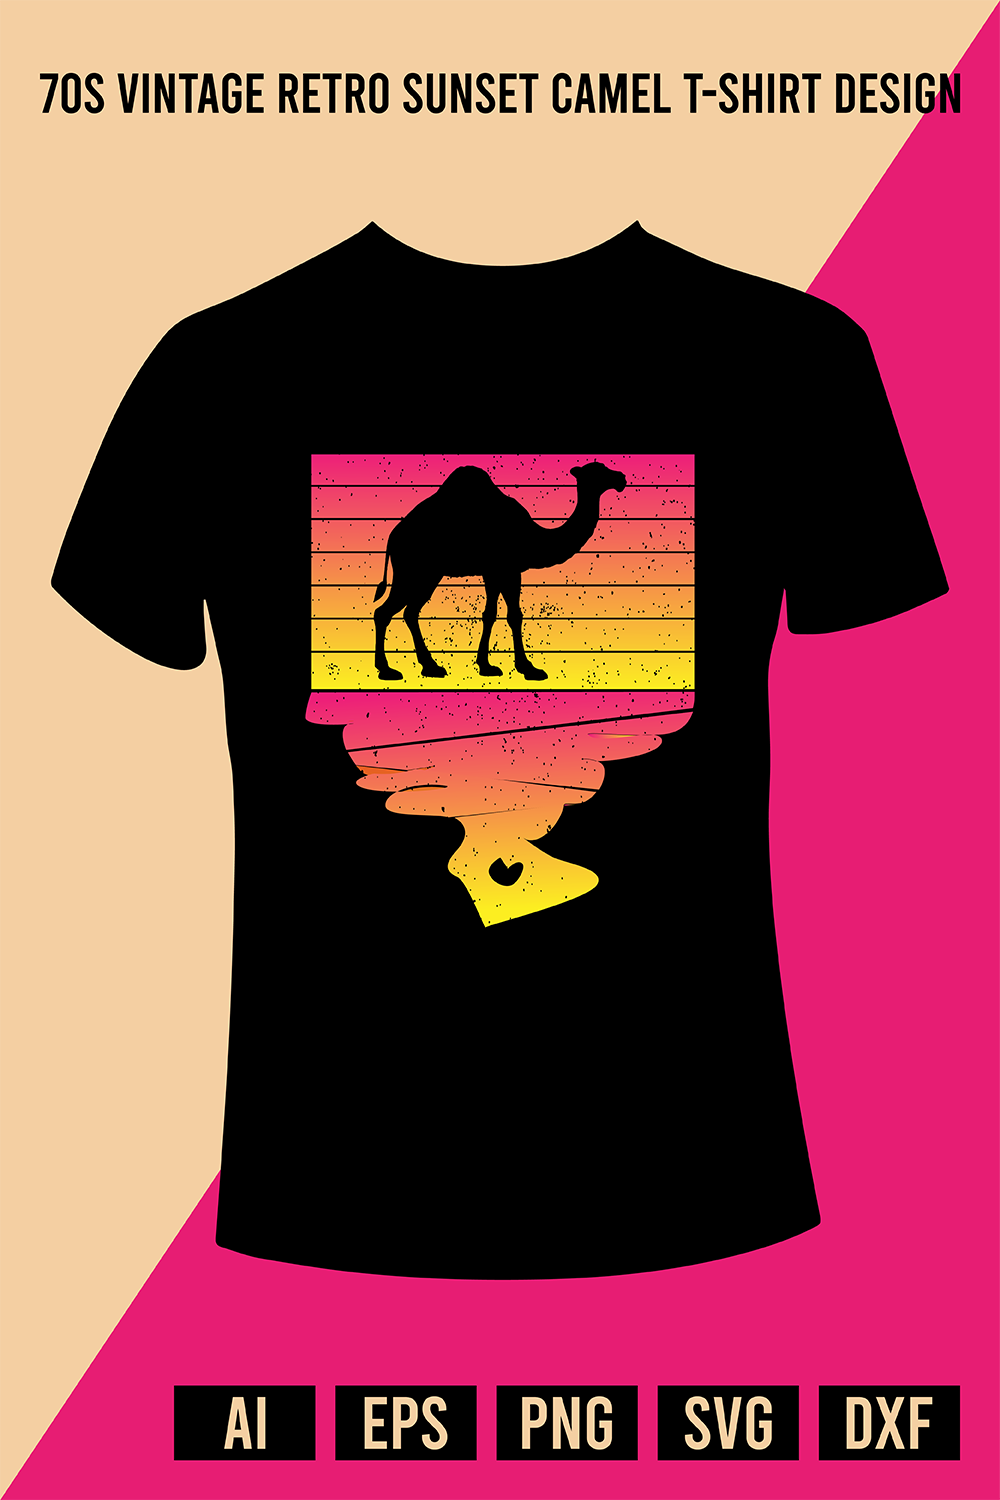 70s vintage retro sunset Camel T-Shirt Design pinterest preview image.